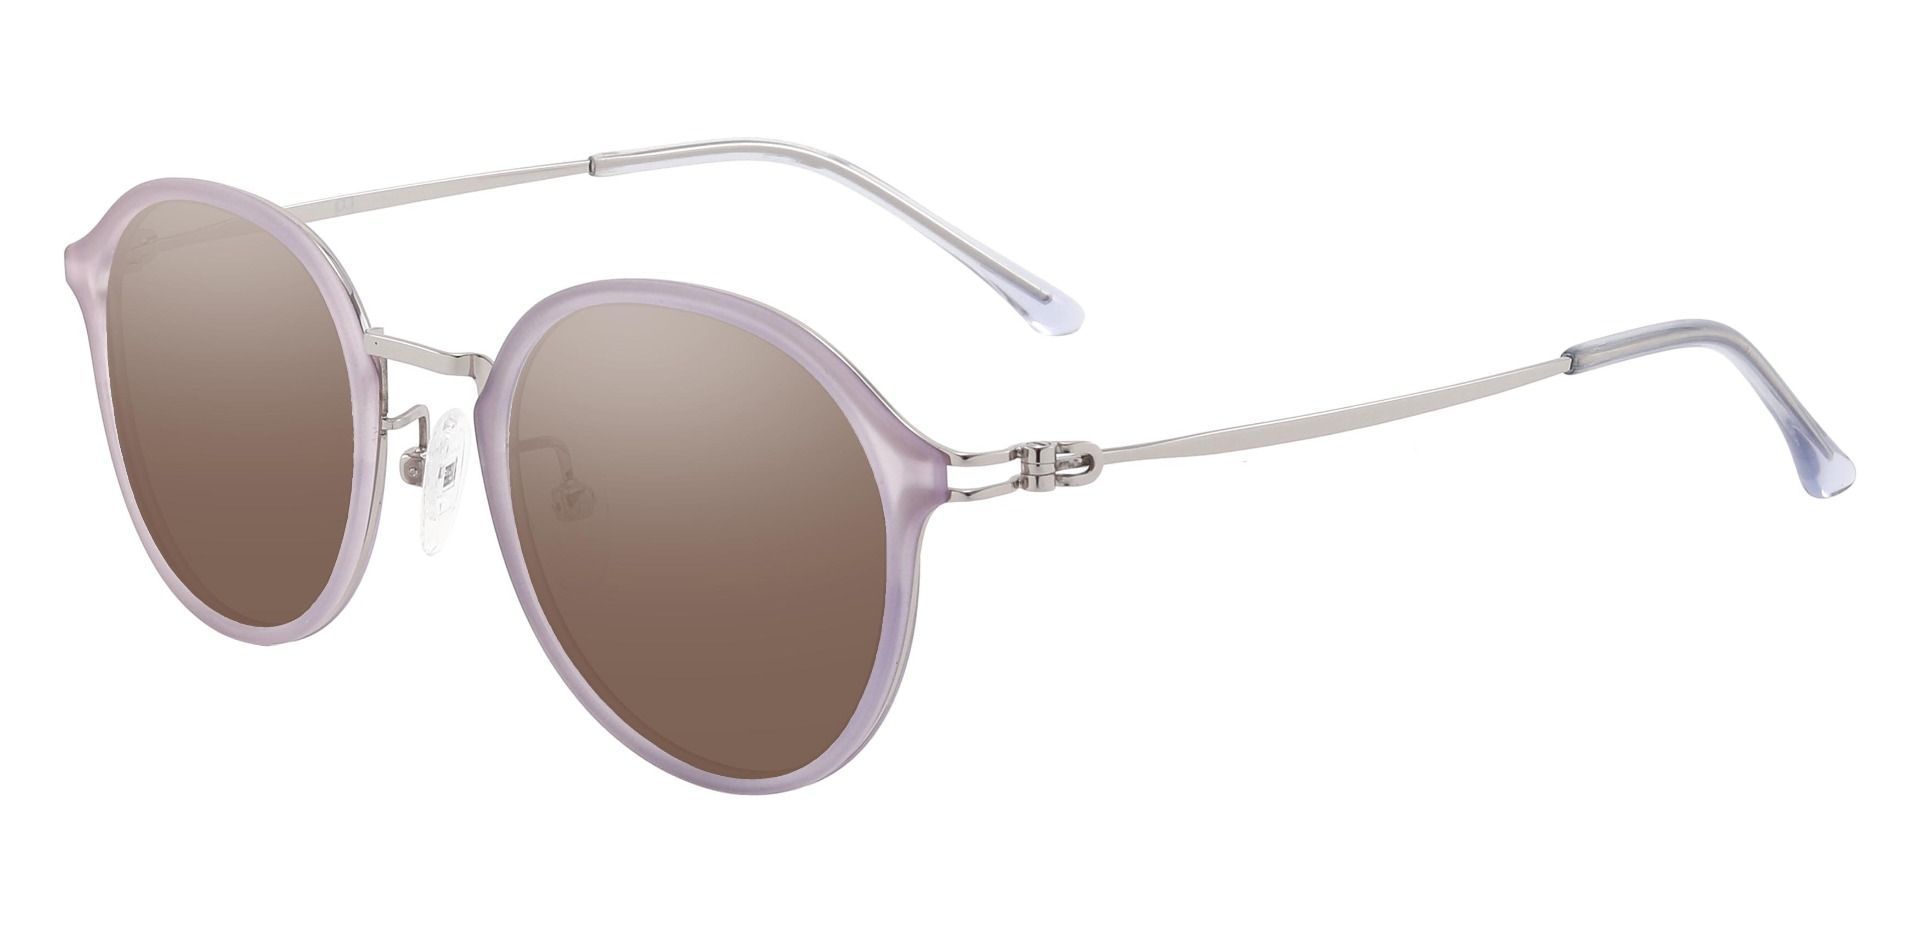 Billings Round Prescription Sunglasses - Purple Frame With Brown Lenses